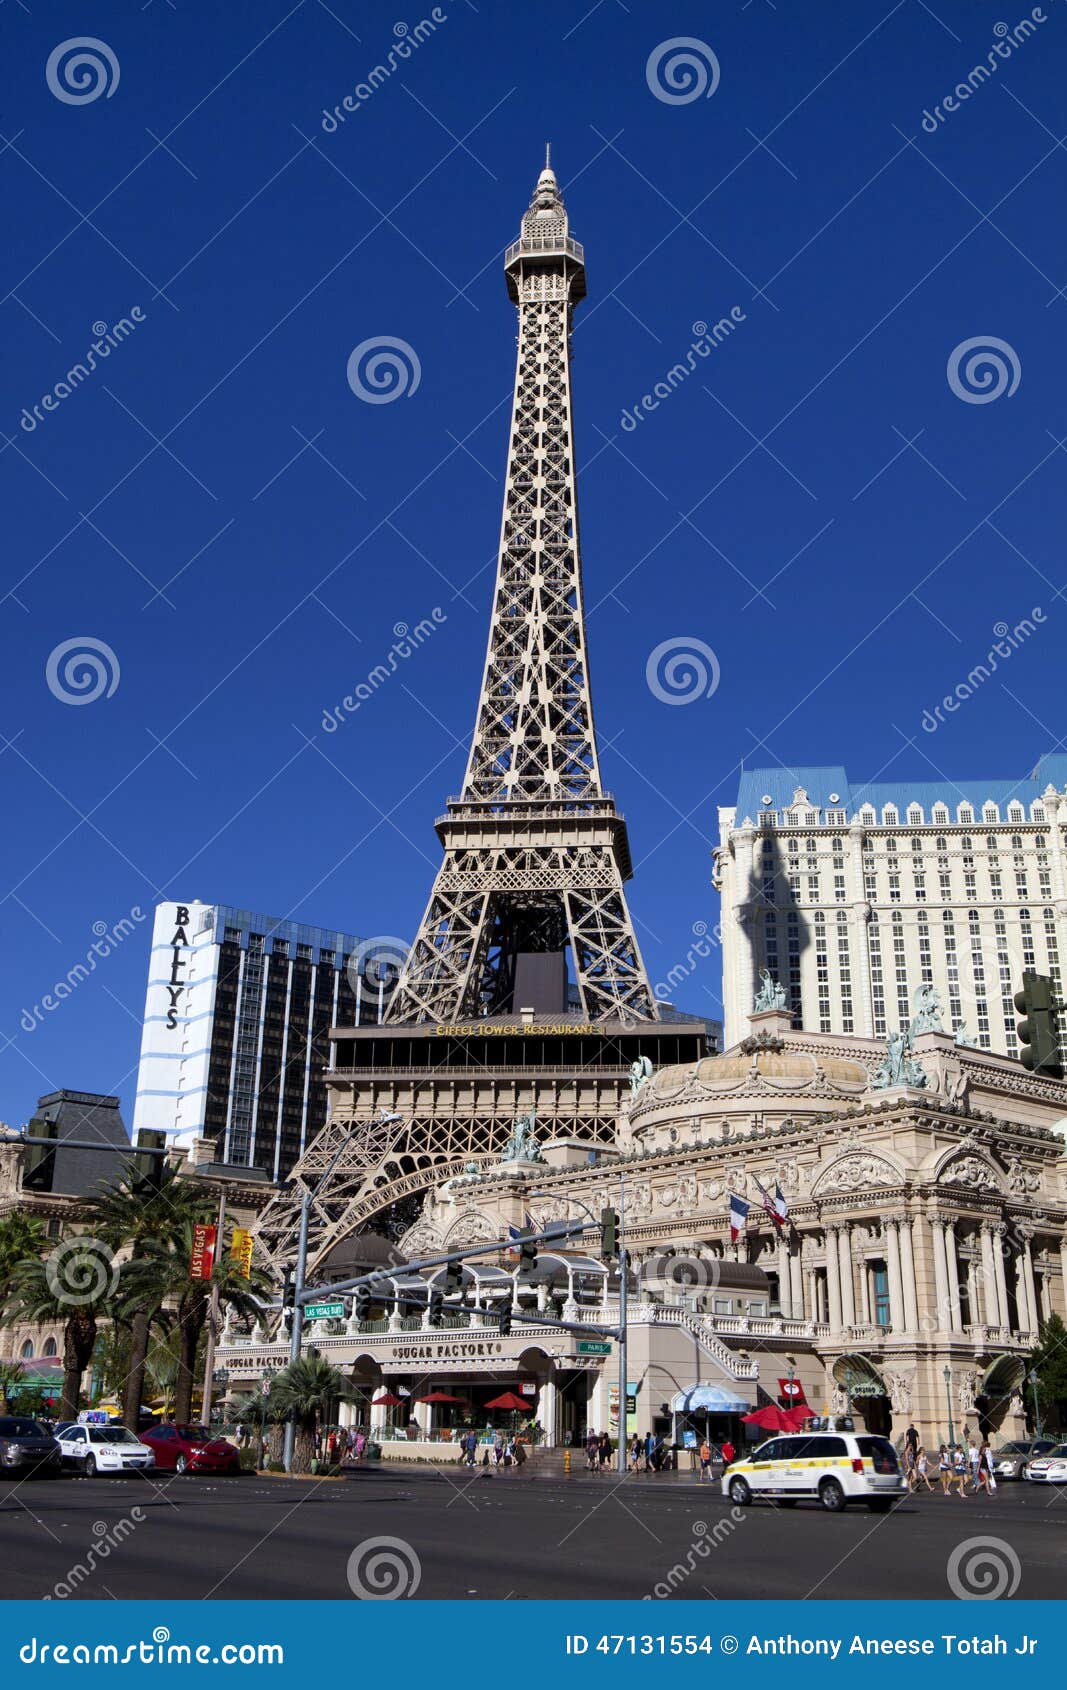 Eiffel Tower Replica at the Paris Hotel and Casino in Las Vegas ...